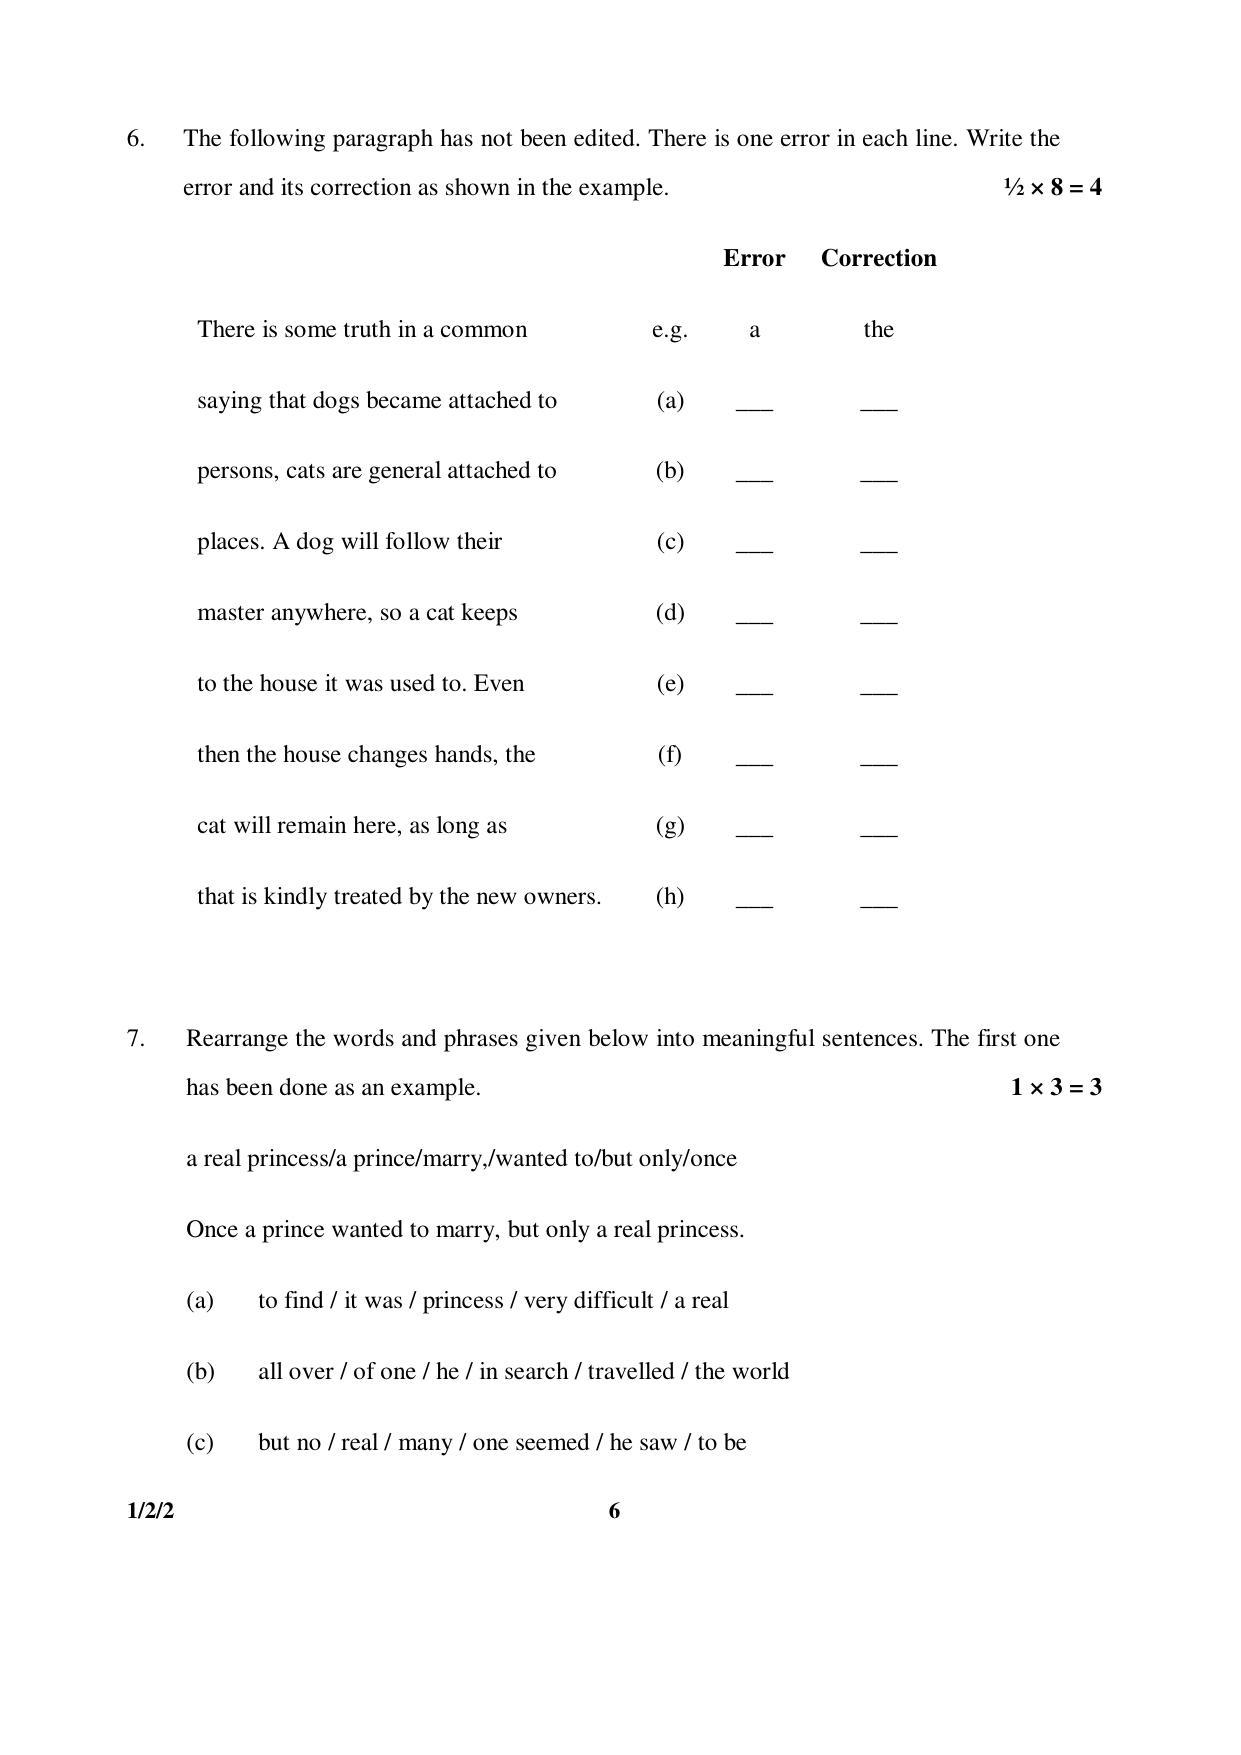 CBSE Class 10 1-2-2 ENGLISH COMMUNICATIVE 2016 Question Paper - Page 6